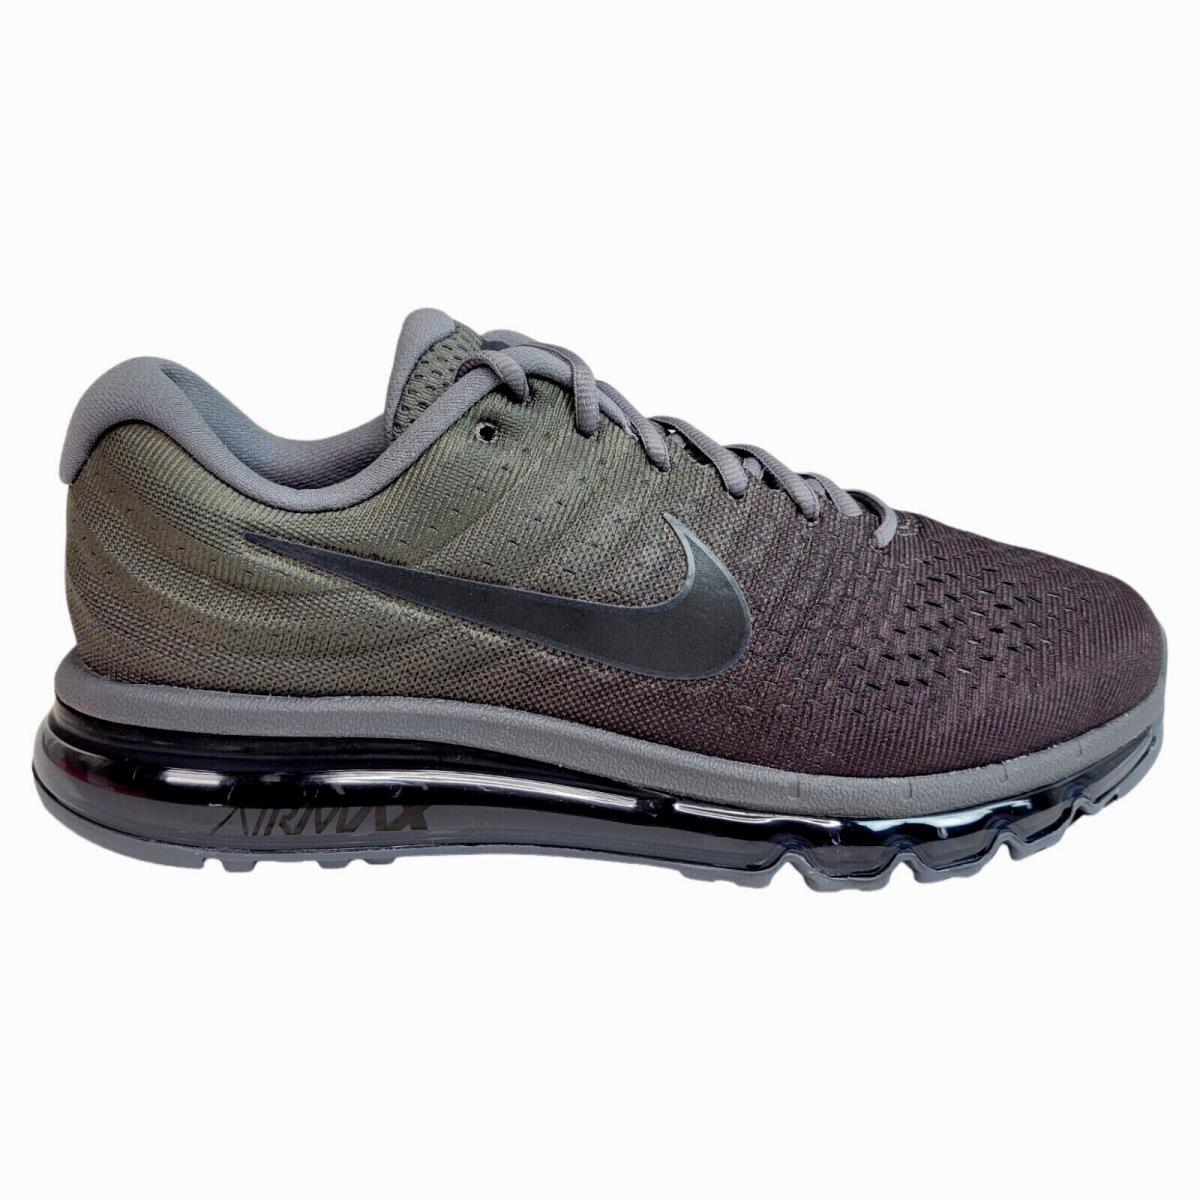 Nike Mens 10 10.5 11 Air Max 2017 Grey Anthracite Dark Running Shoes 849559-008 - Gray